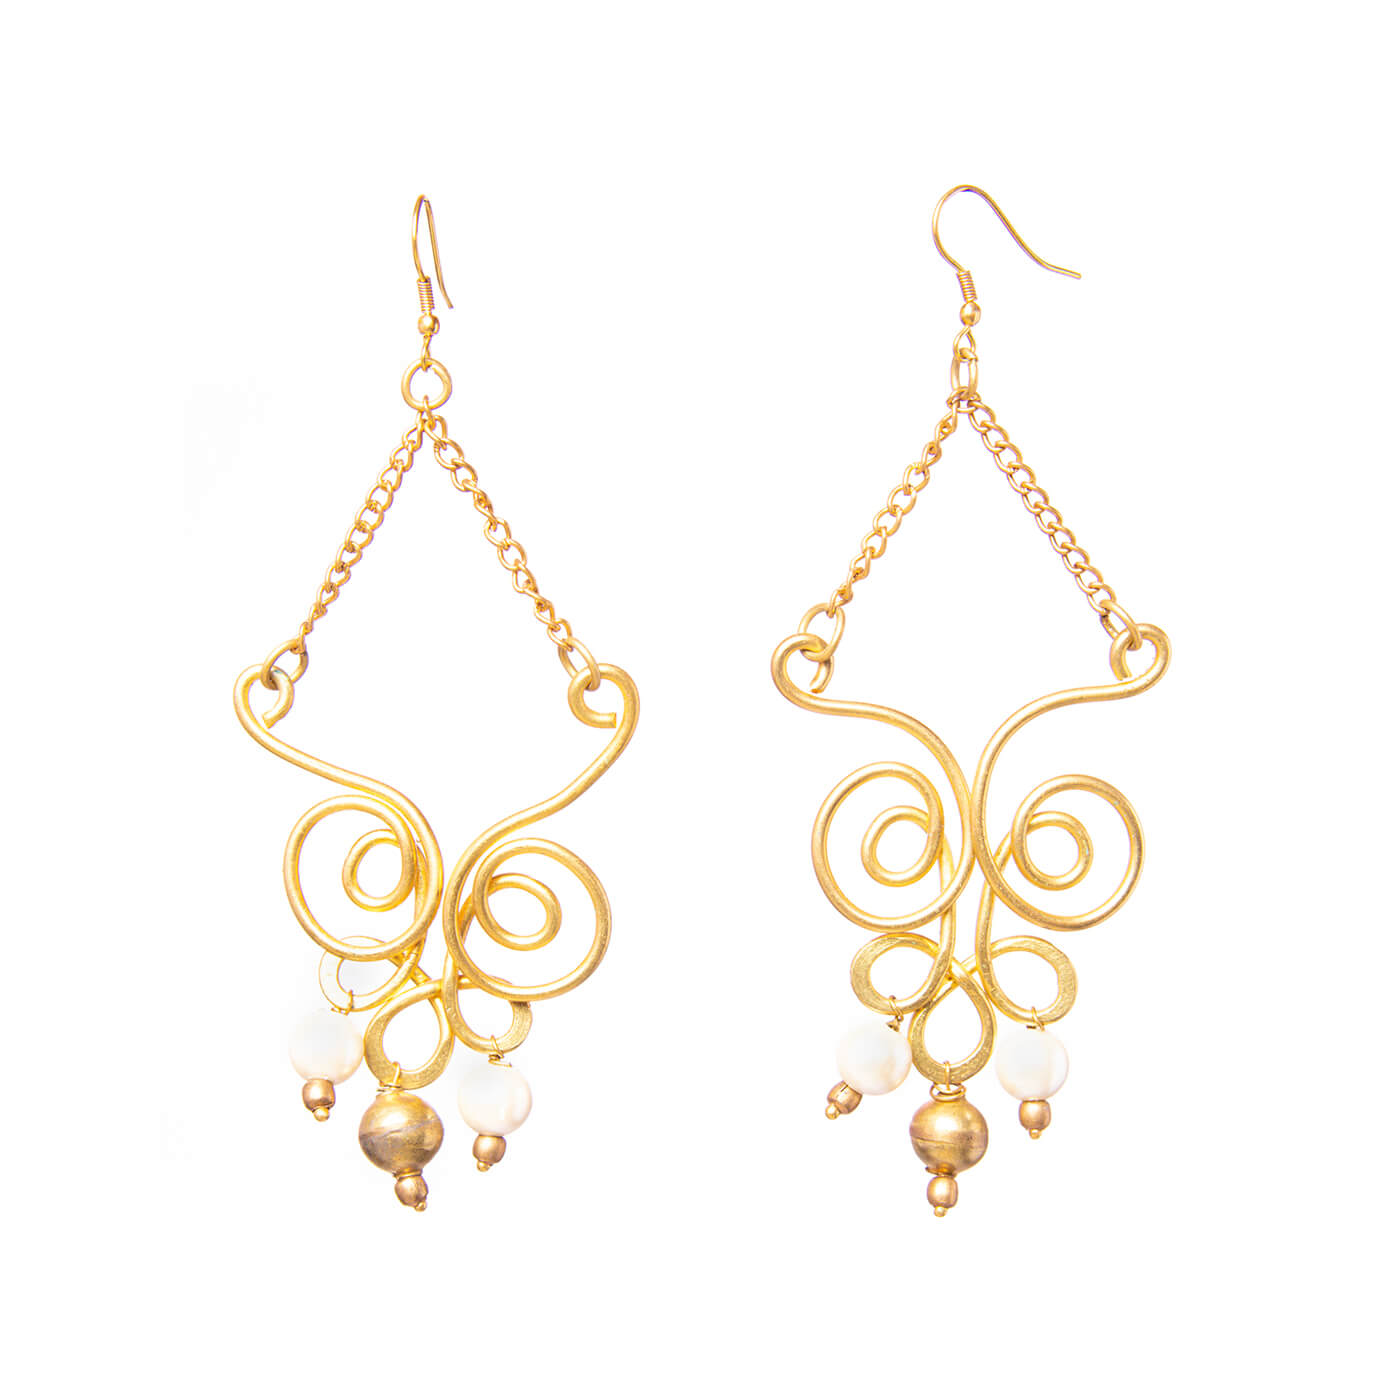 Buy Latest Gold Dangle Earrings Designs Online - Vaibhav Jewellers